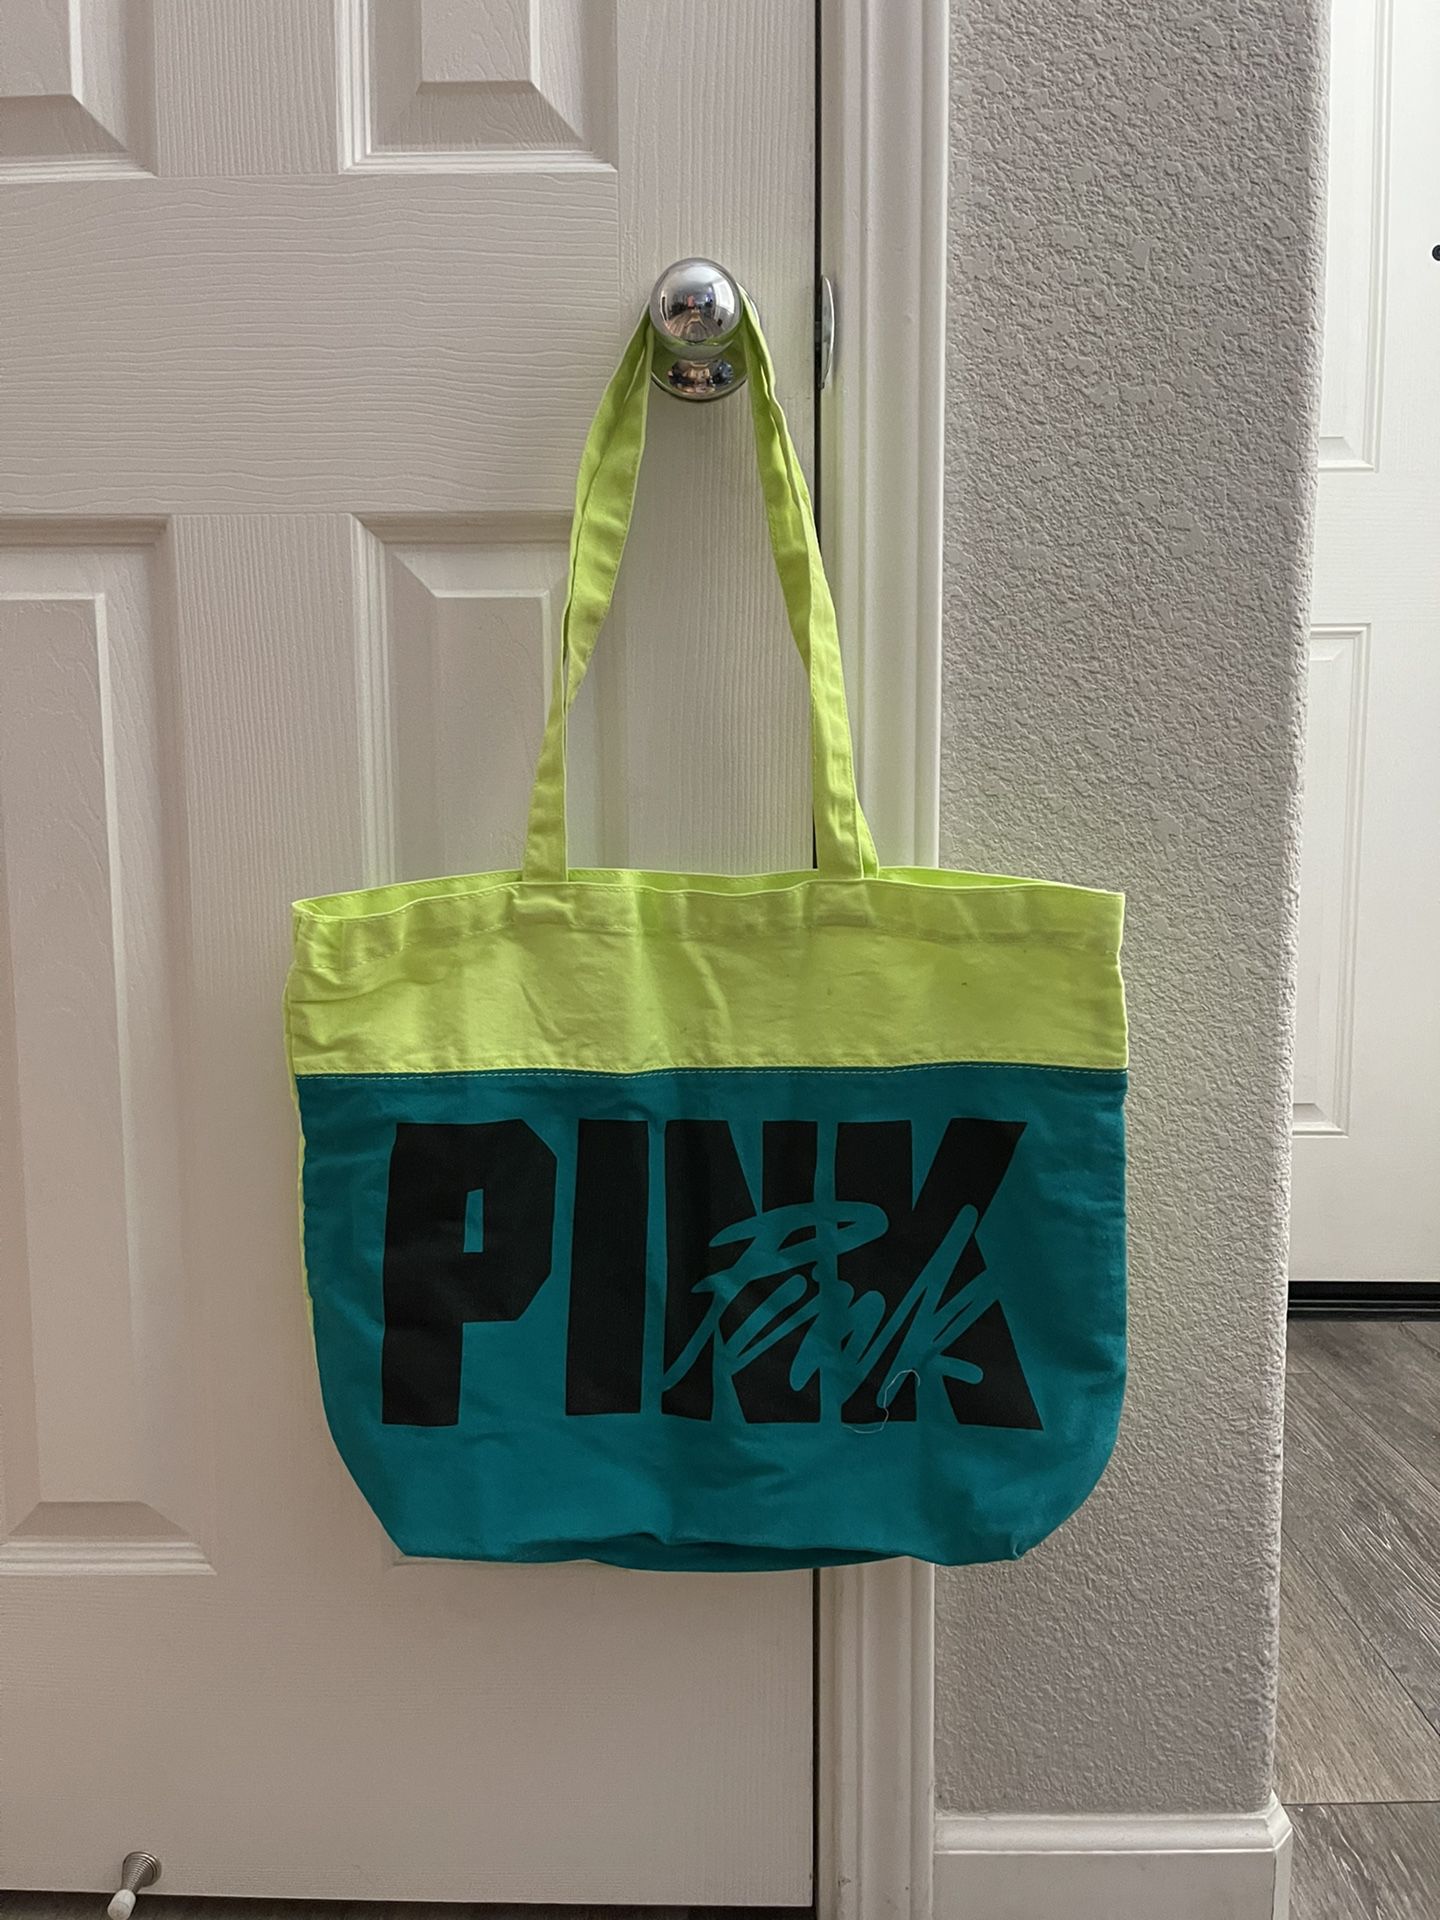 Victoria Secret PINK tote Bag for Sale in Carmichael, CA - OfferUp